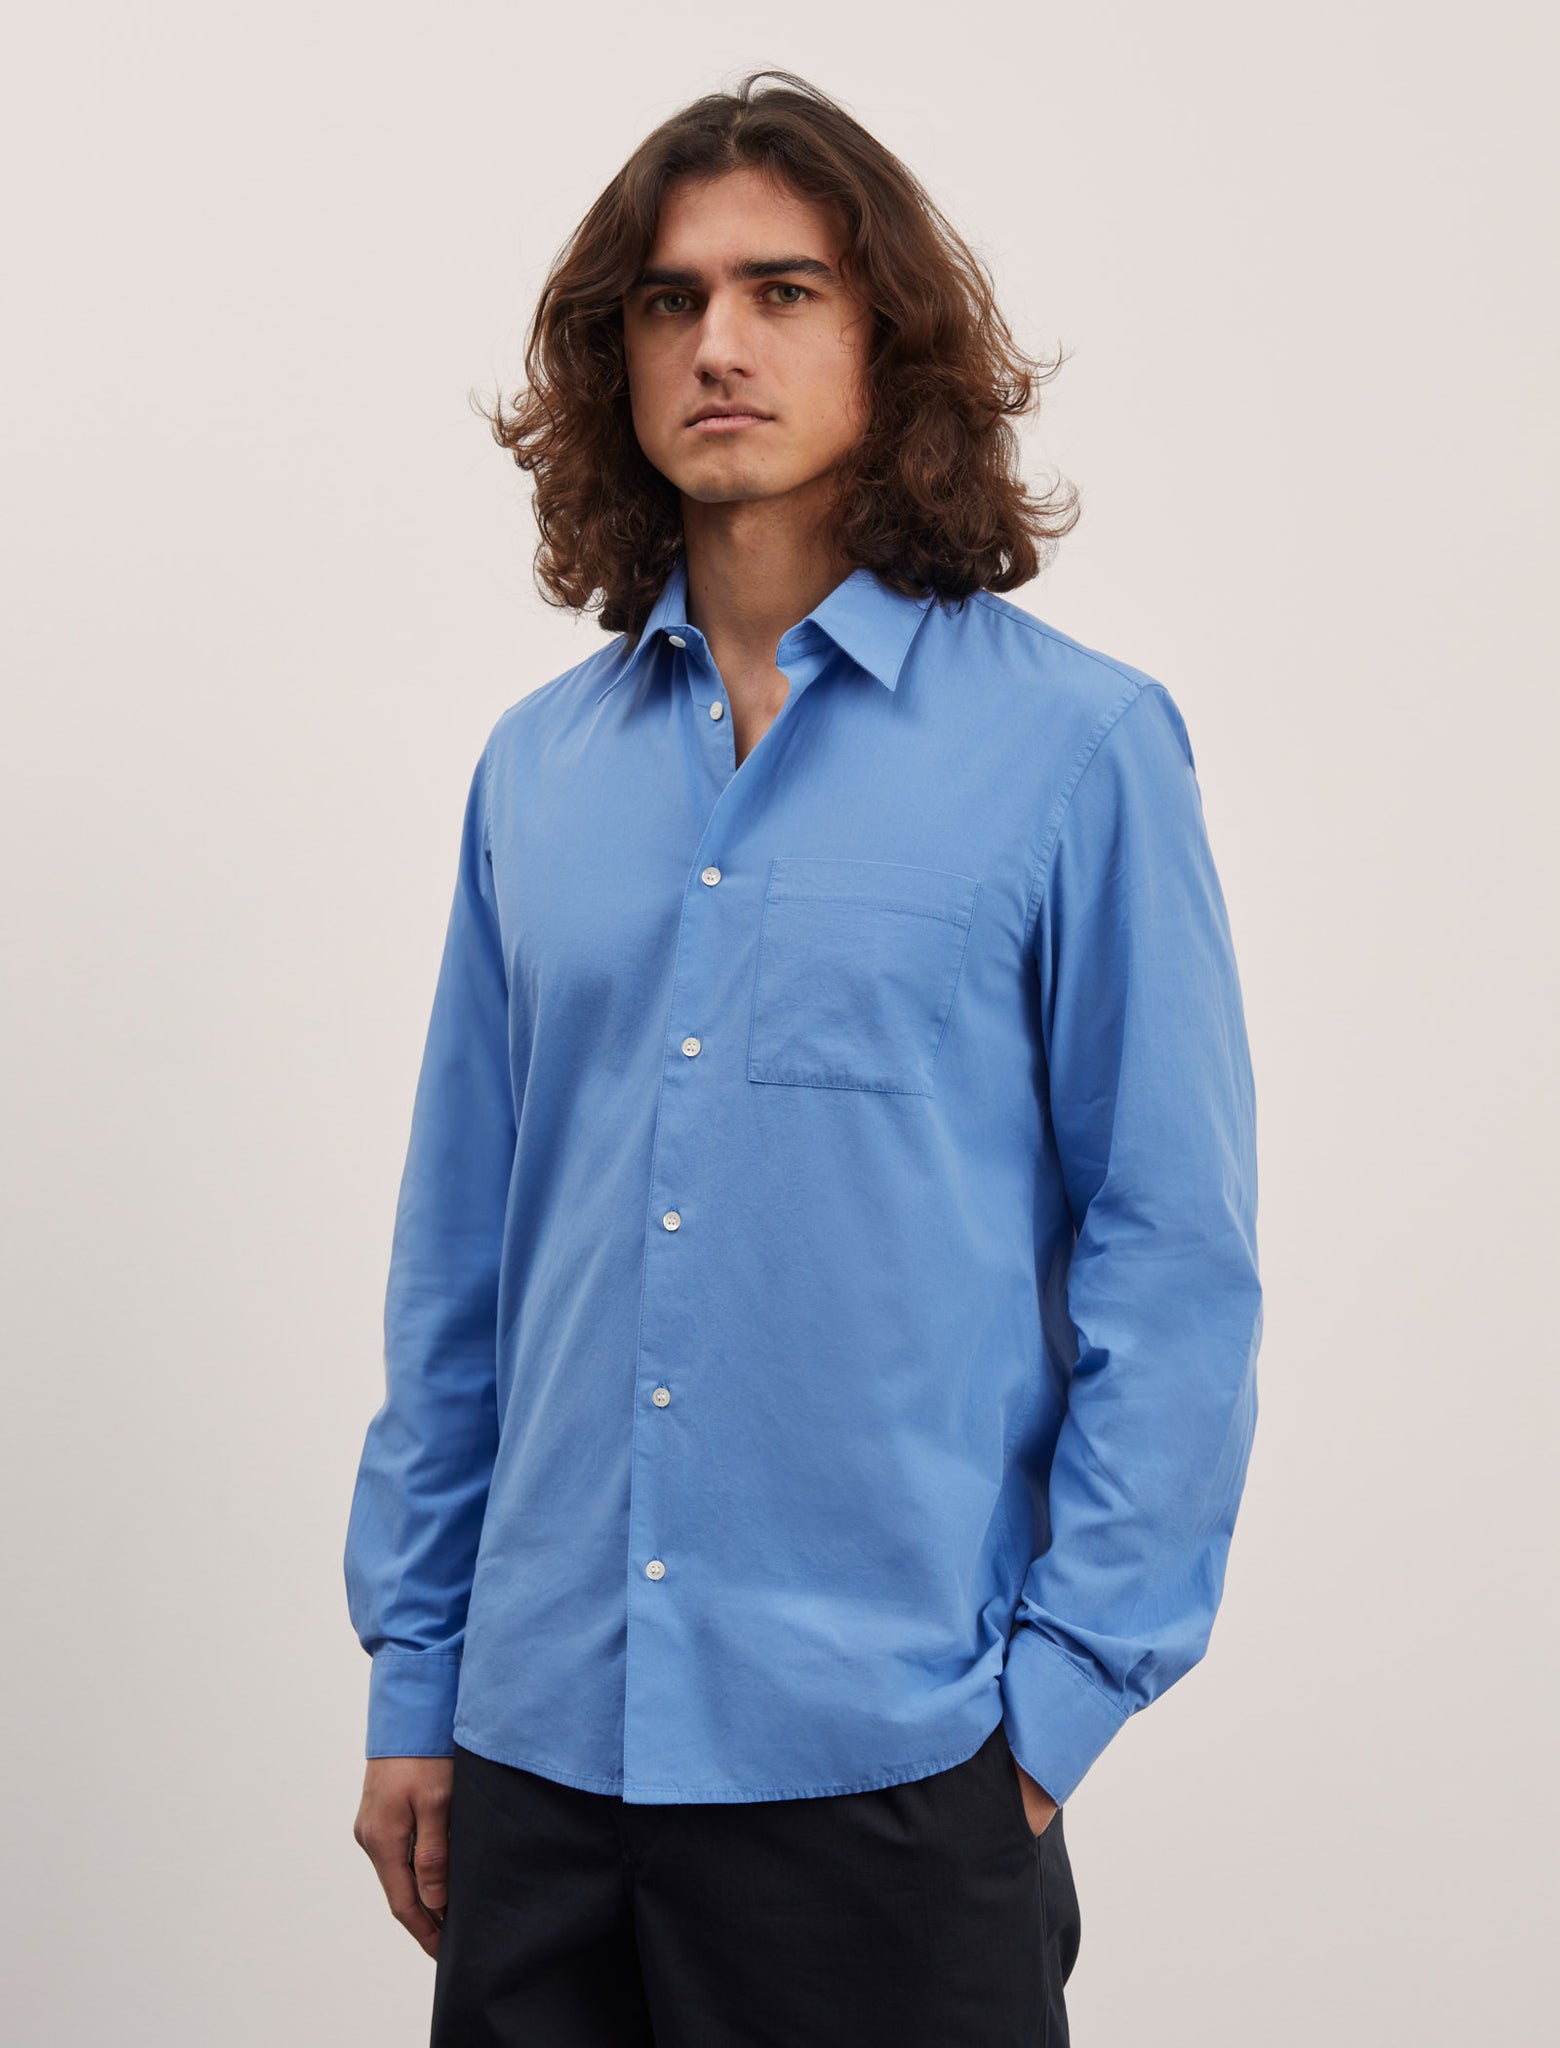 ANOTHER Shirt 3.0, Capri Blue